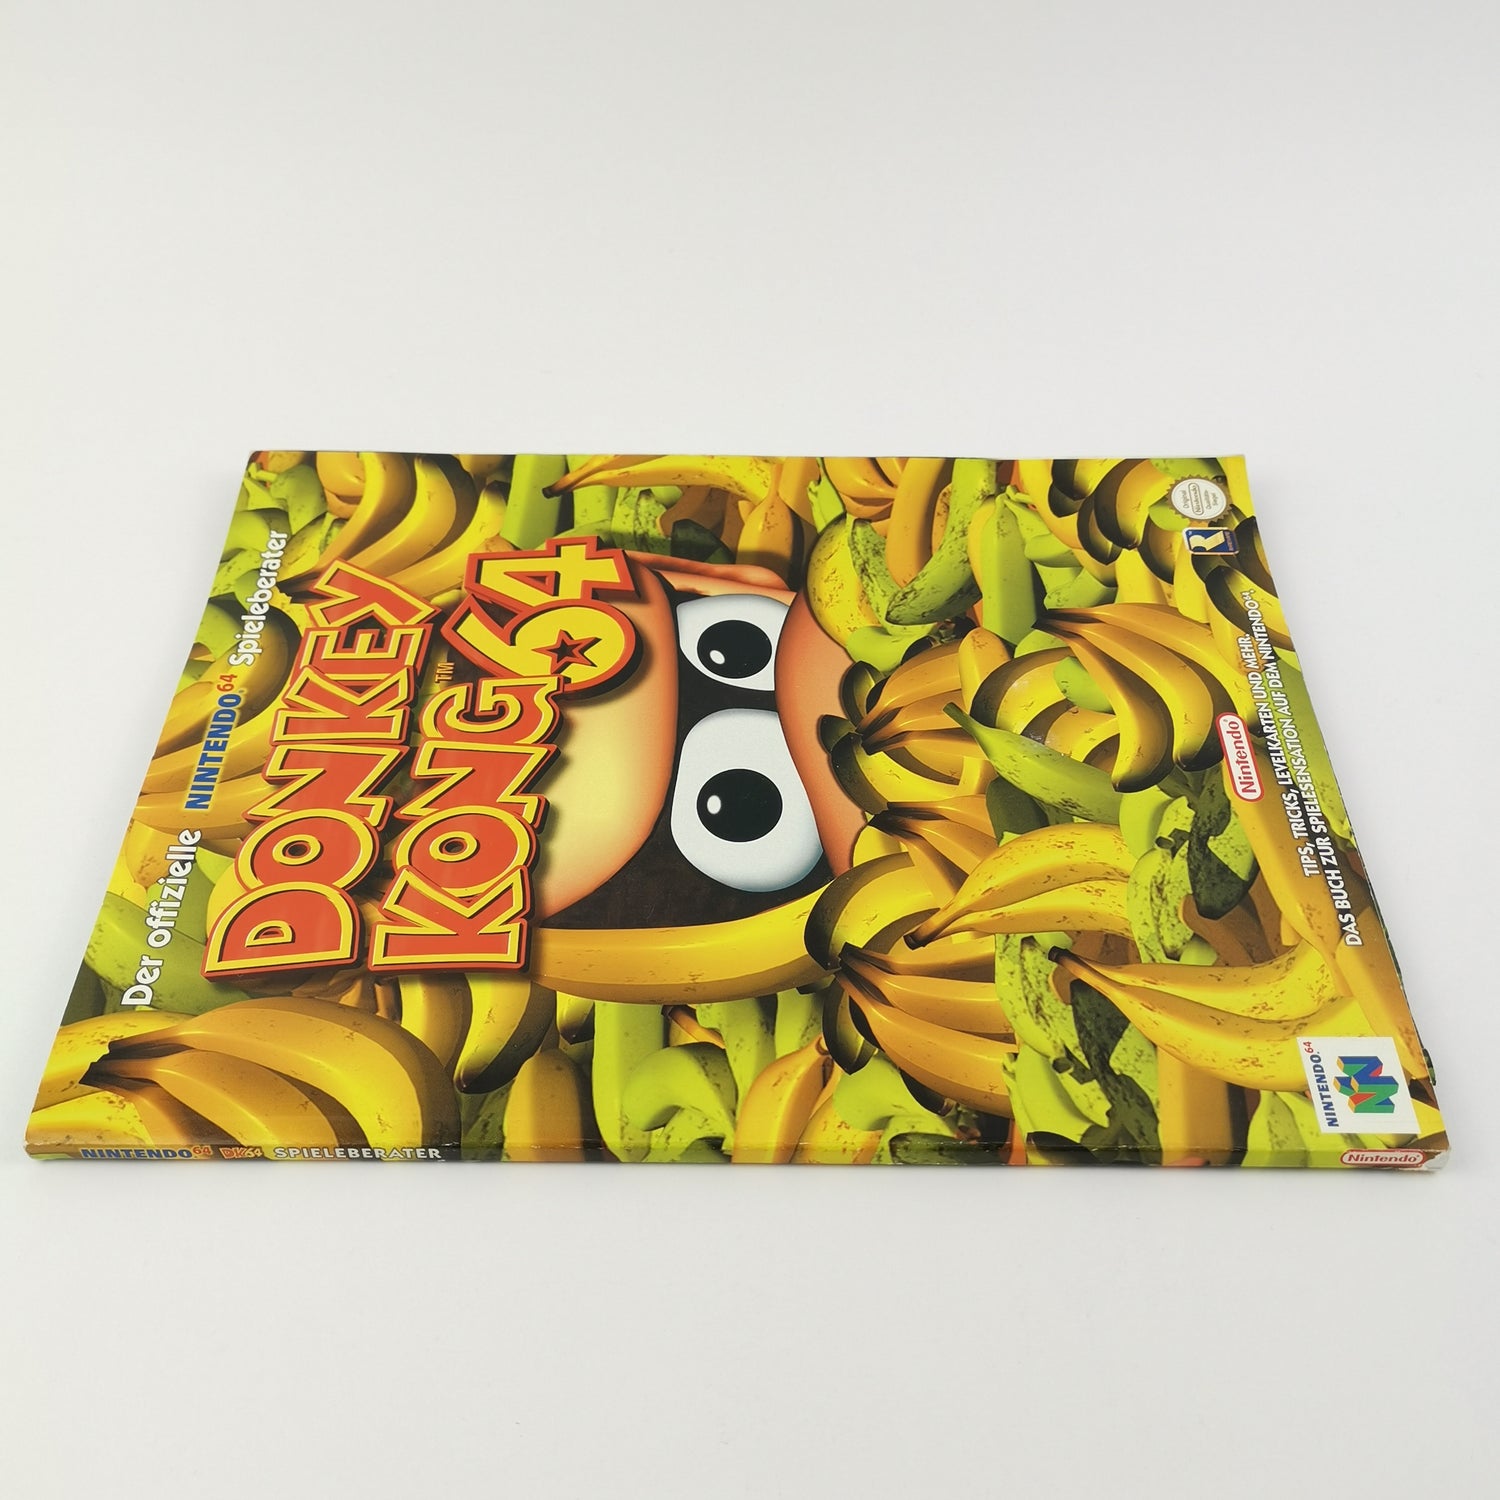 Nintendo 64 game: Donkey Kong 64 with expansion pack + game advisor - original packaging N64